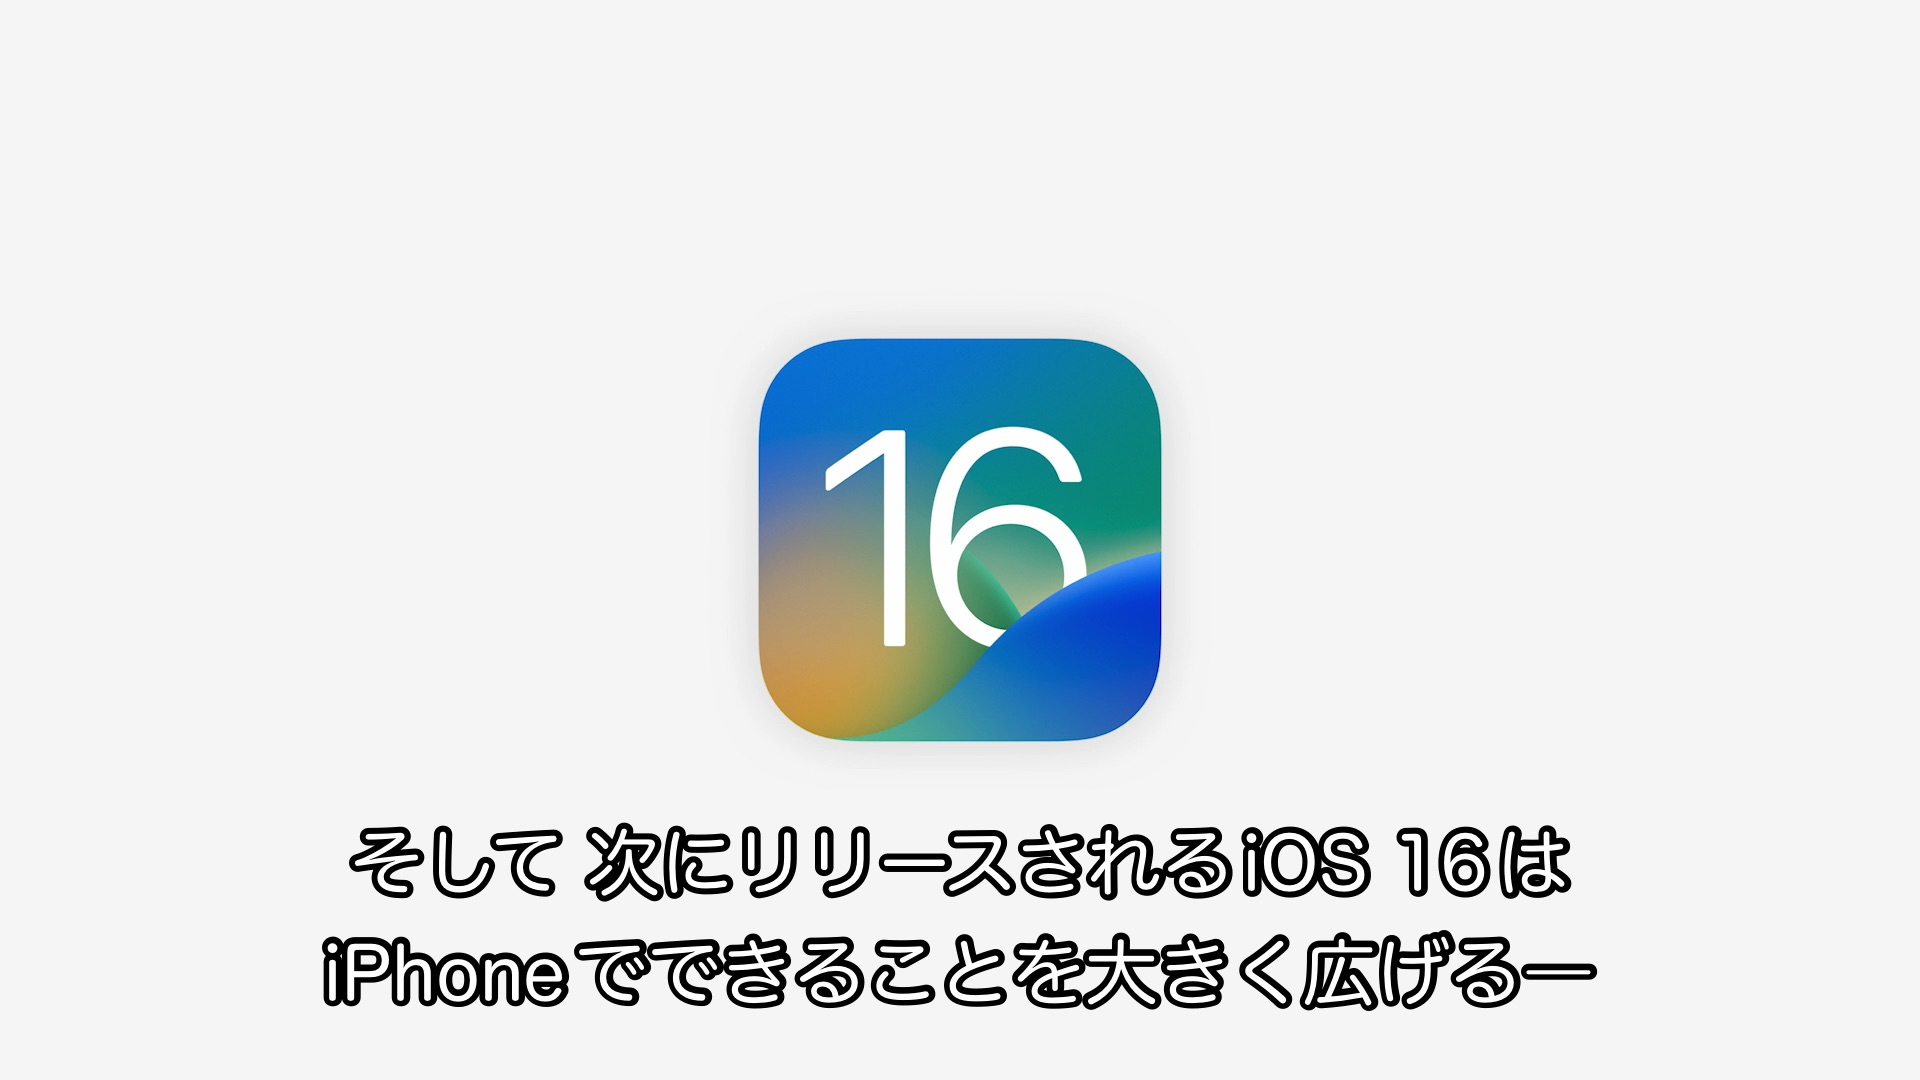 Apple iOS 16を発表